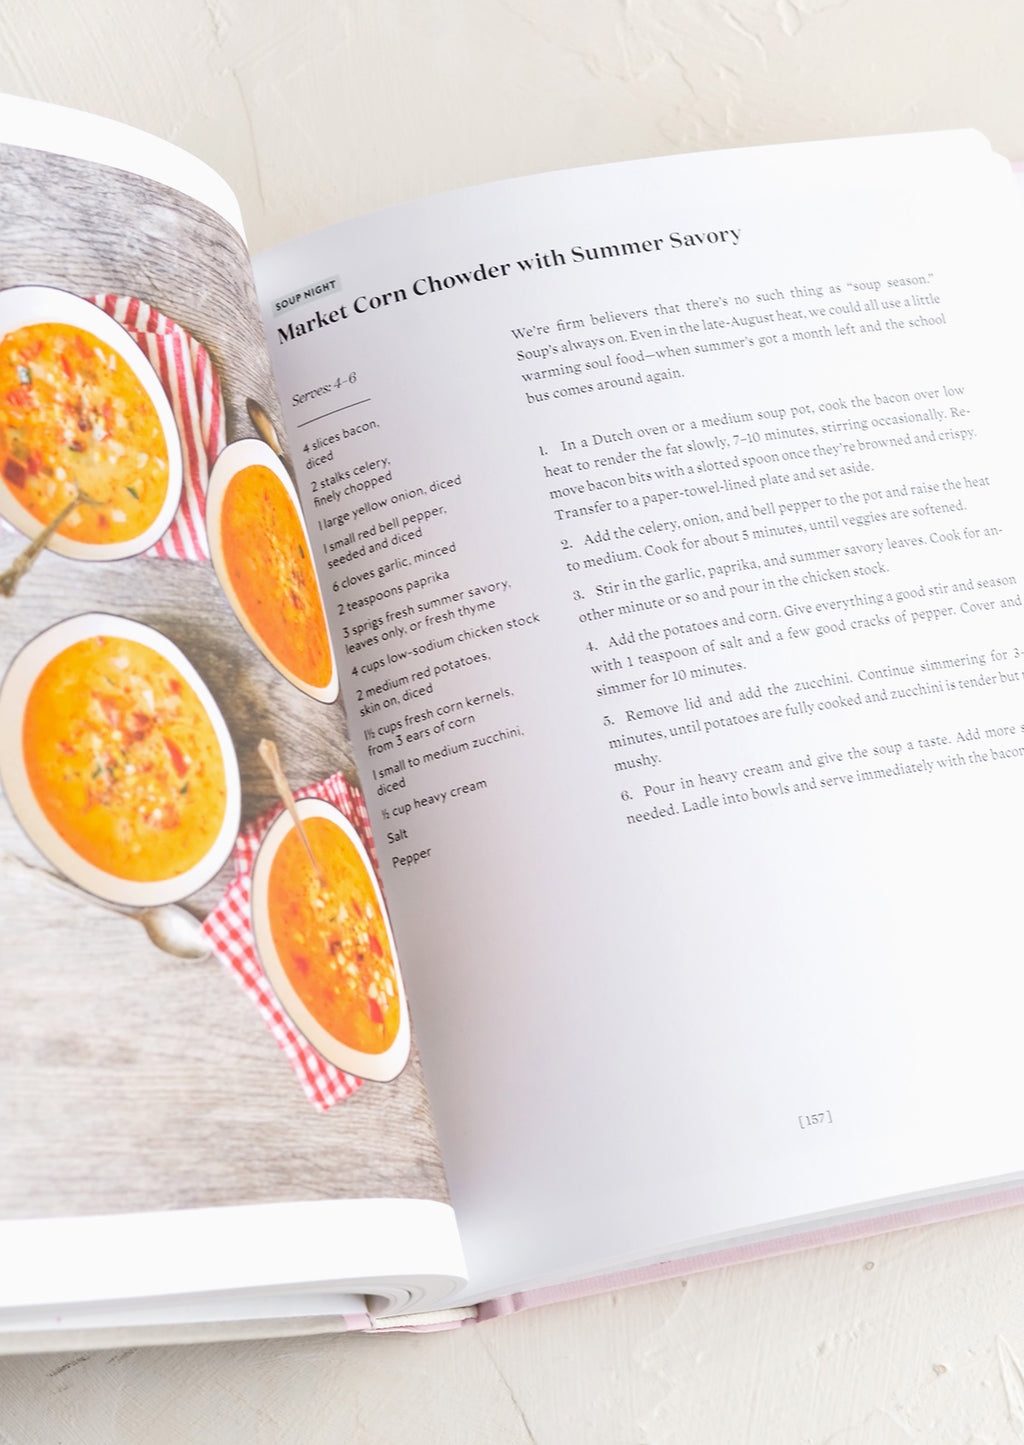 2: A cookbook open to recipe for market corn chowder.